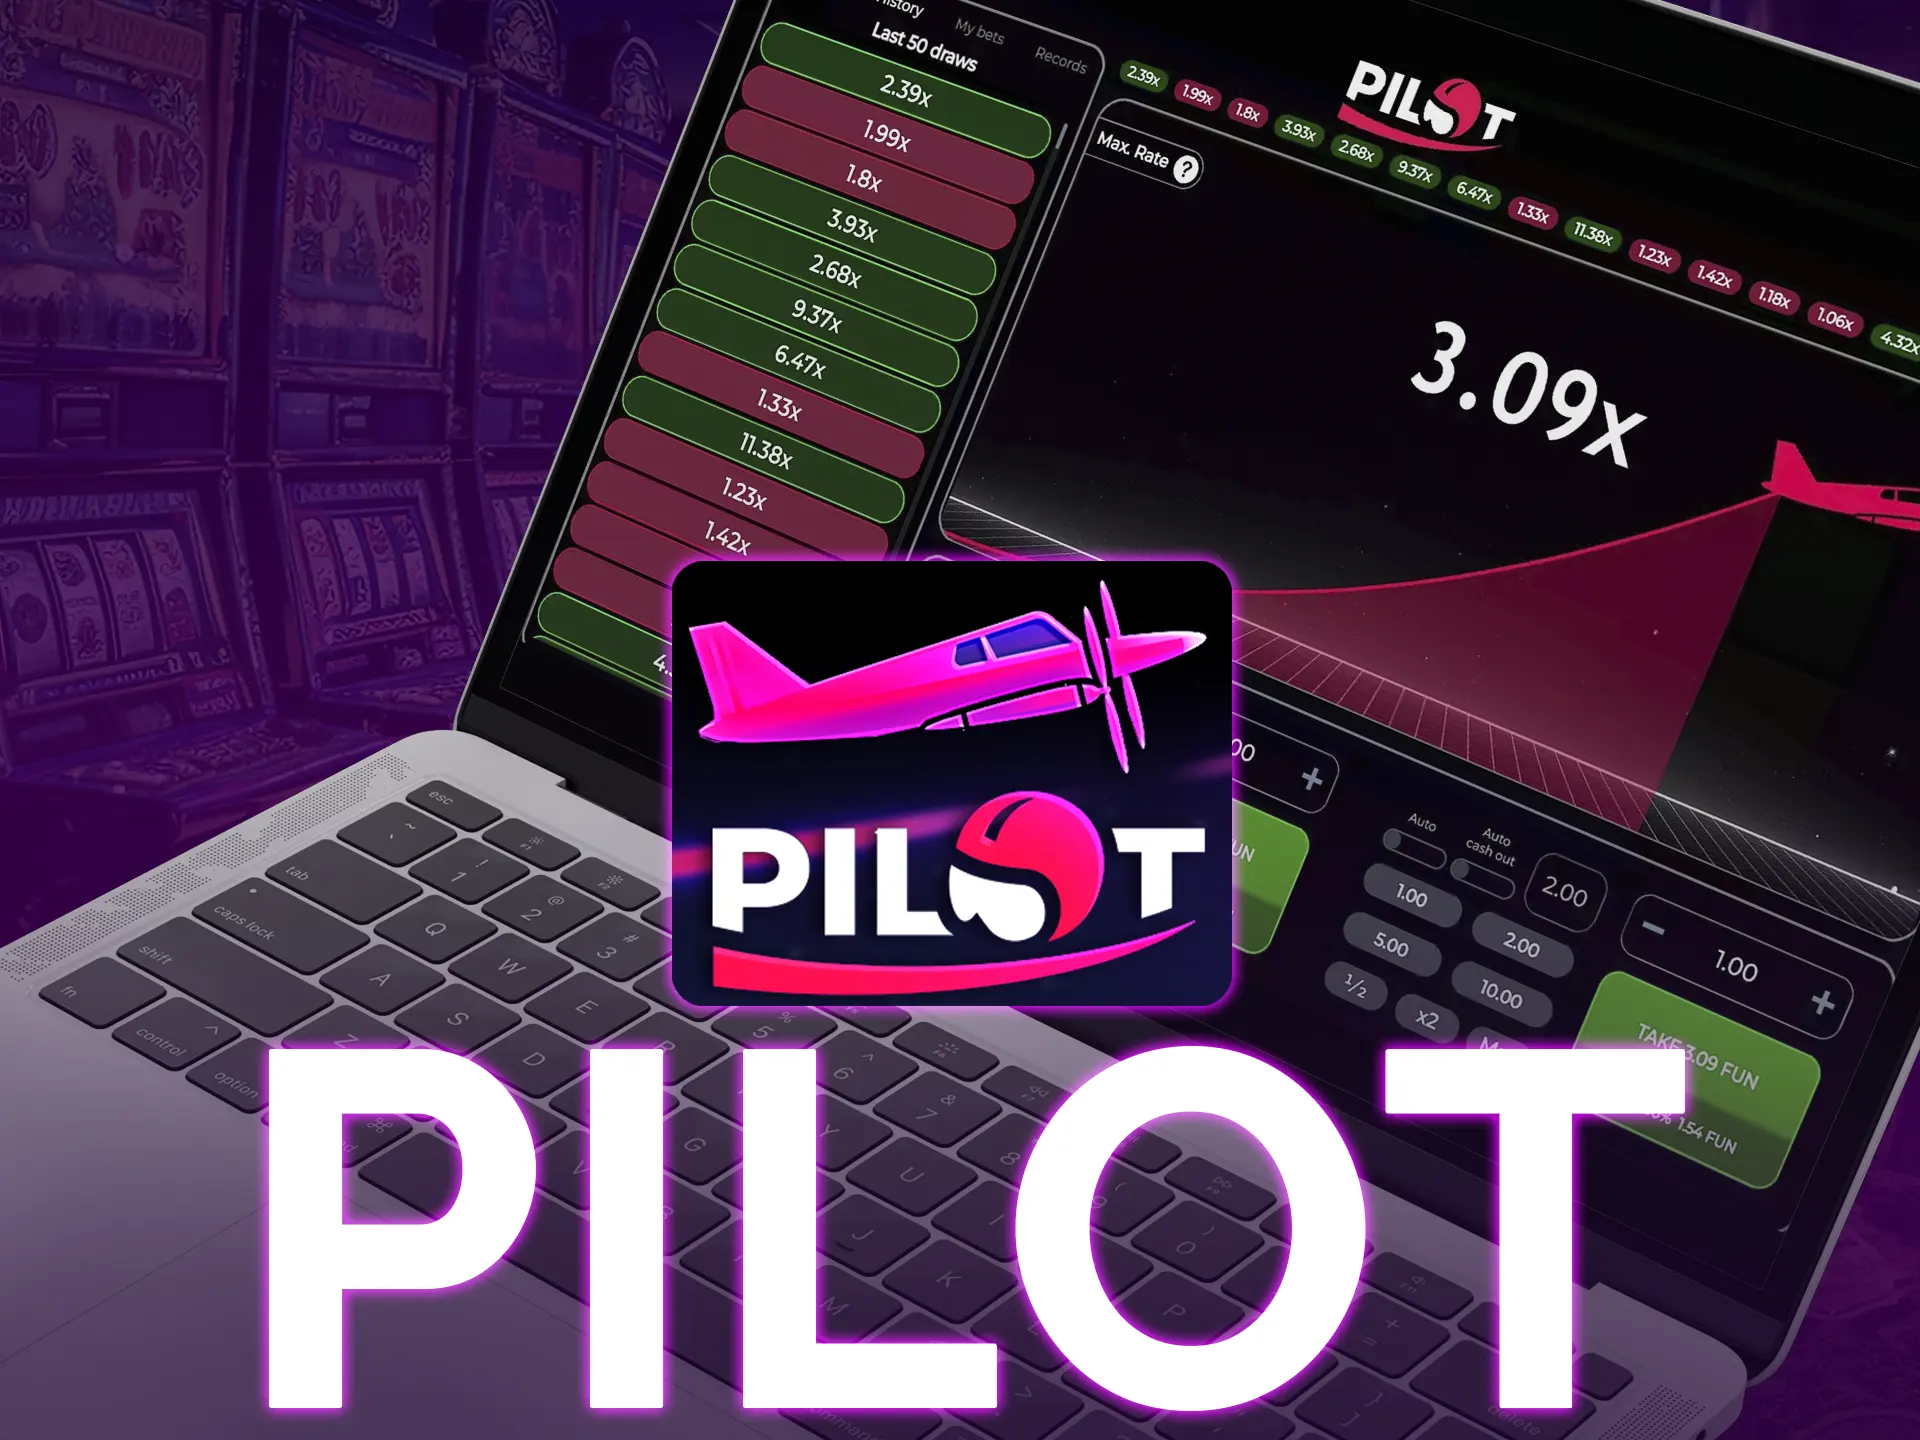 Enjoy Pilot, a Crash game with diverse betting options.